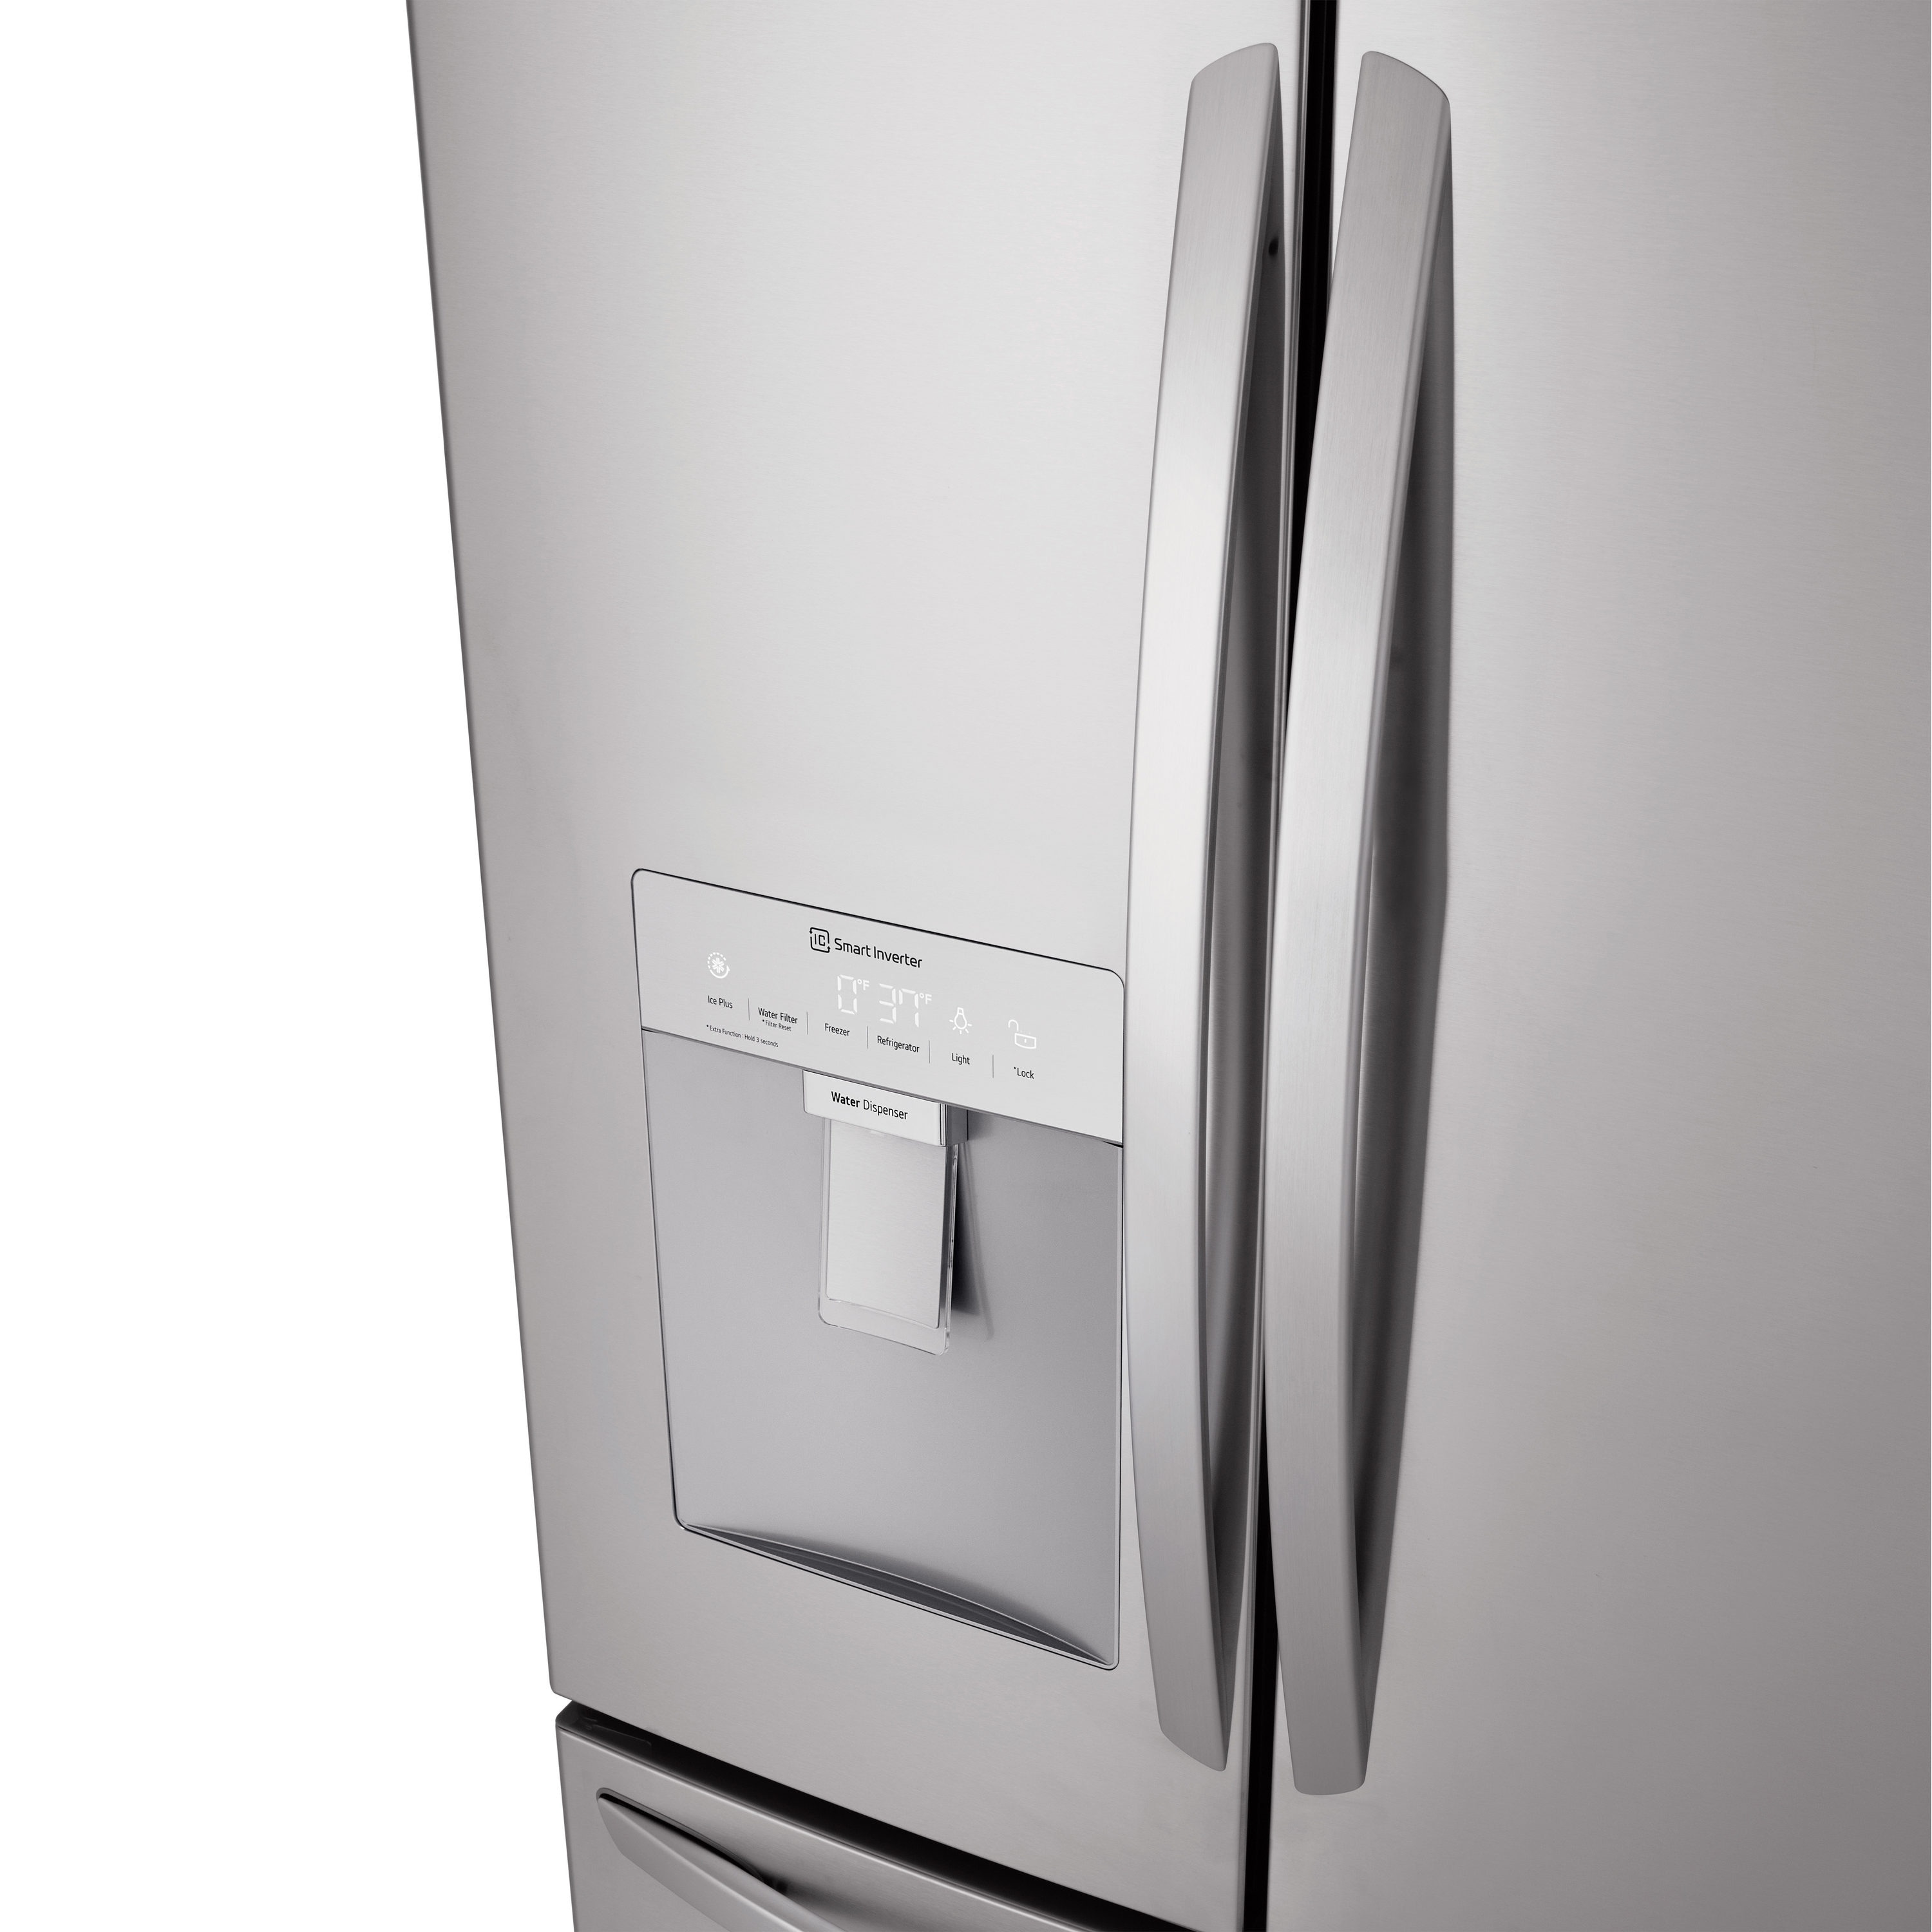 LRFWS2906VLG Appliances 29 cu ft. French Door Refrigerator with